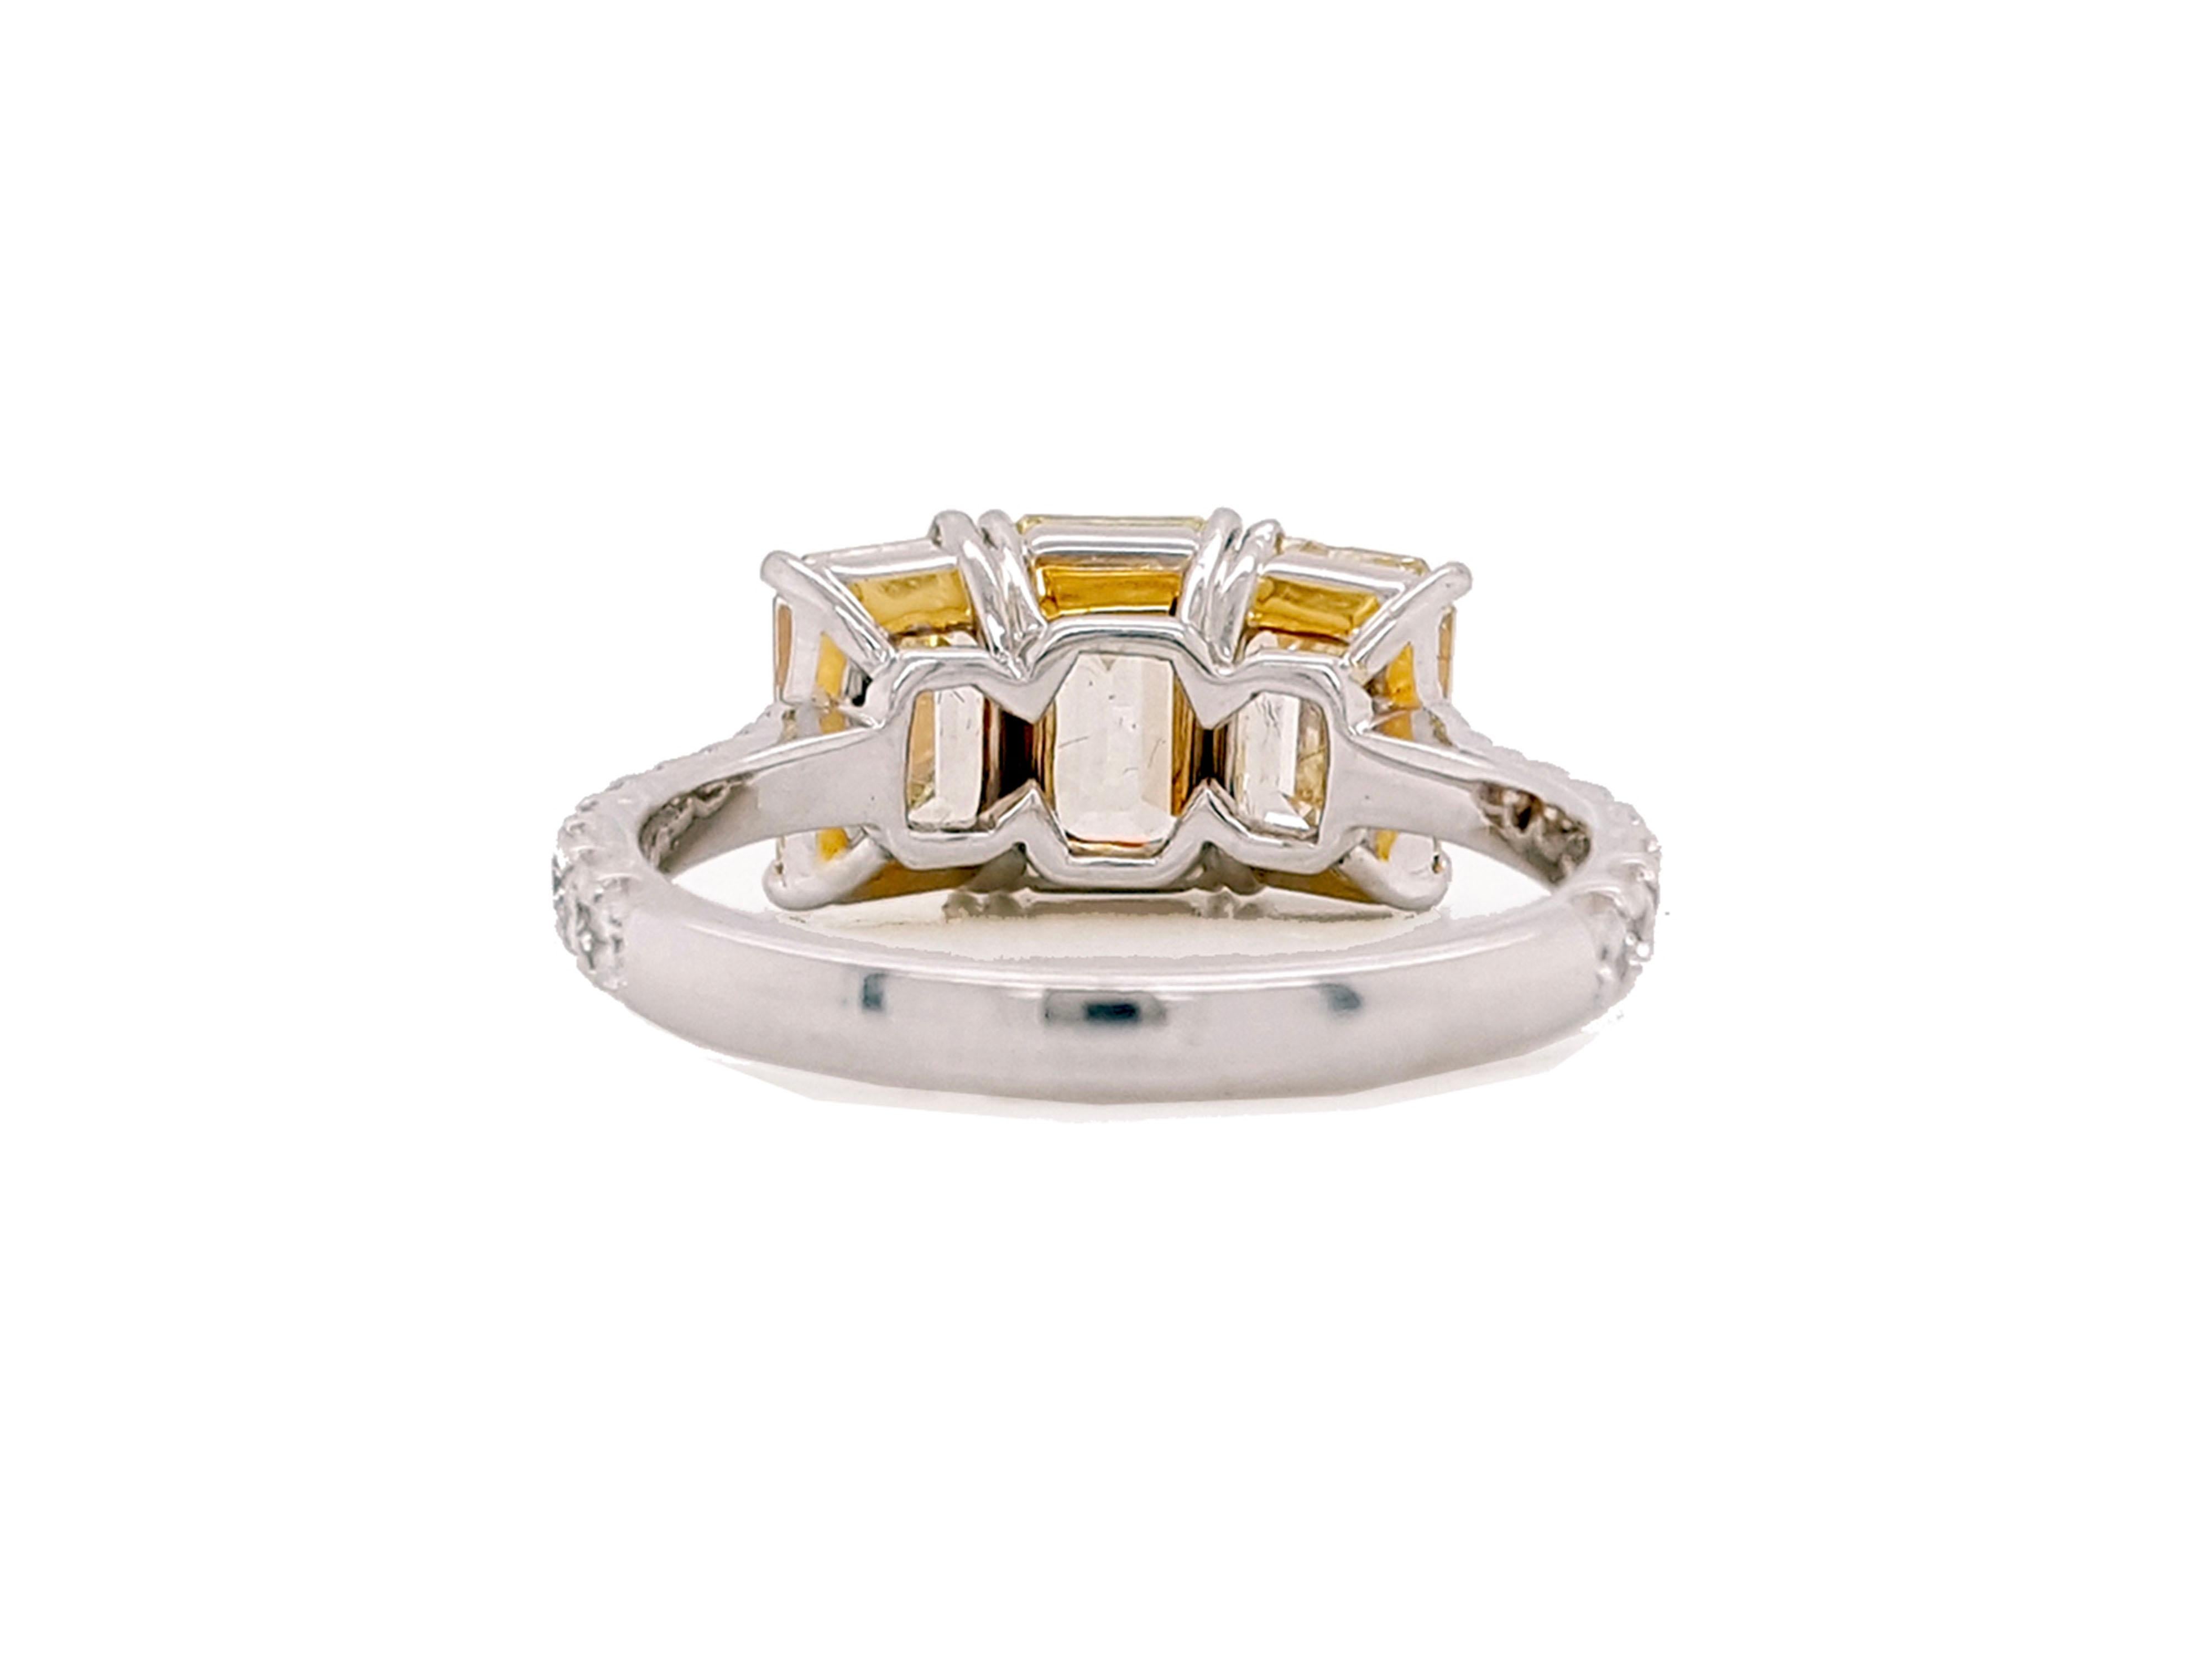 Contemporary 3.35 Carat Yellow Diamond Emerald Cut Three-Stone Engagement Ring, Platinum. For Sale